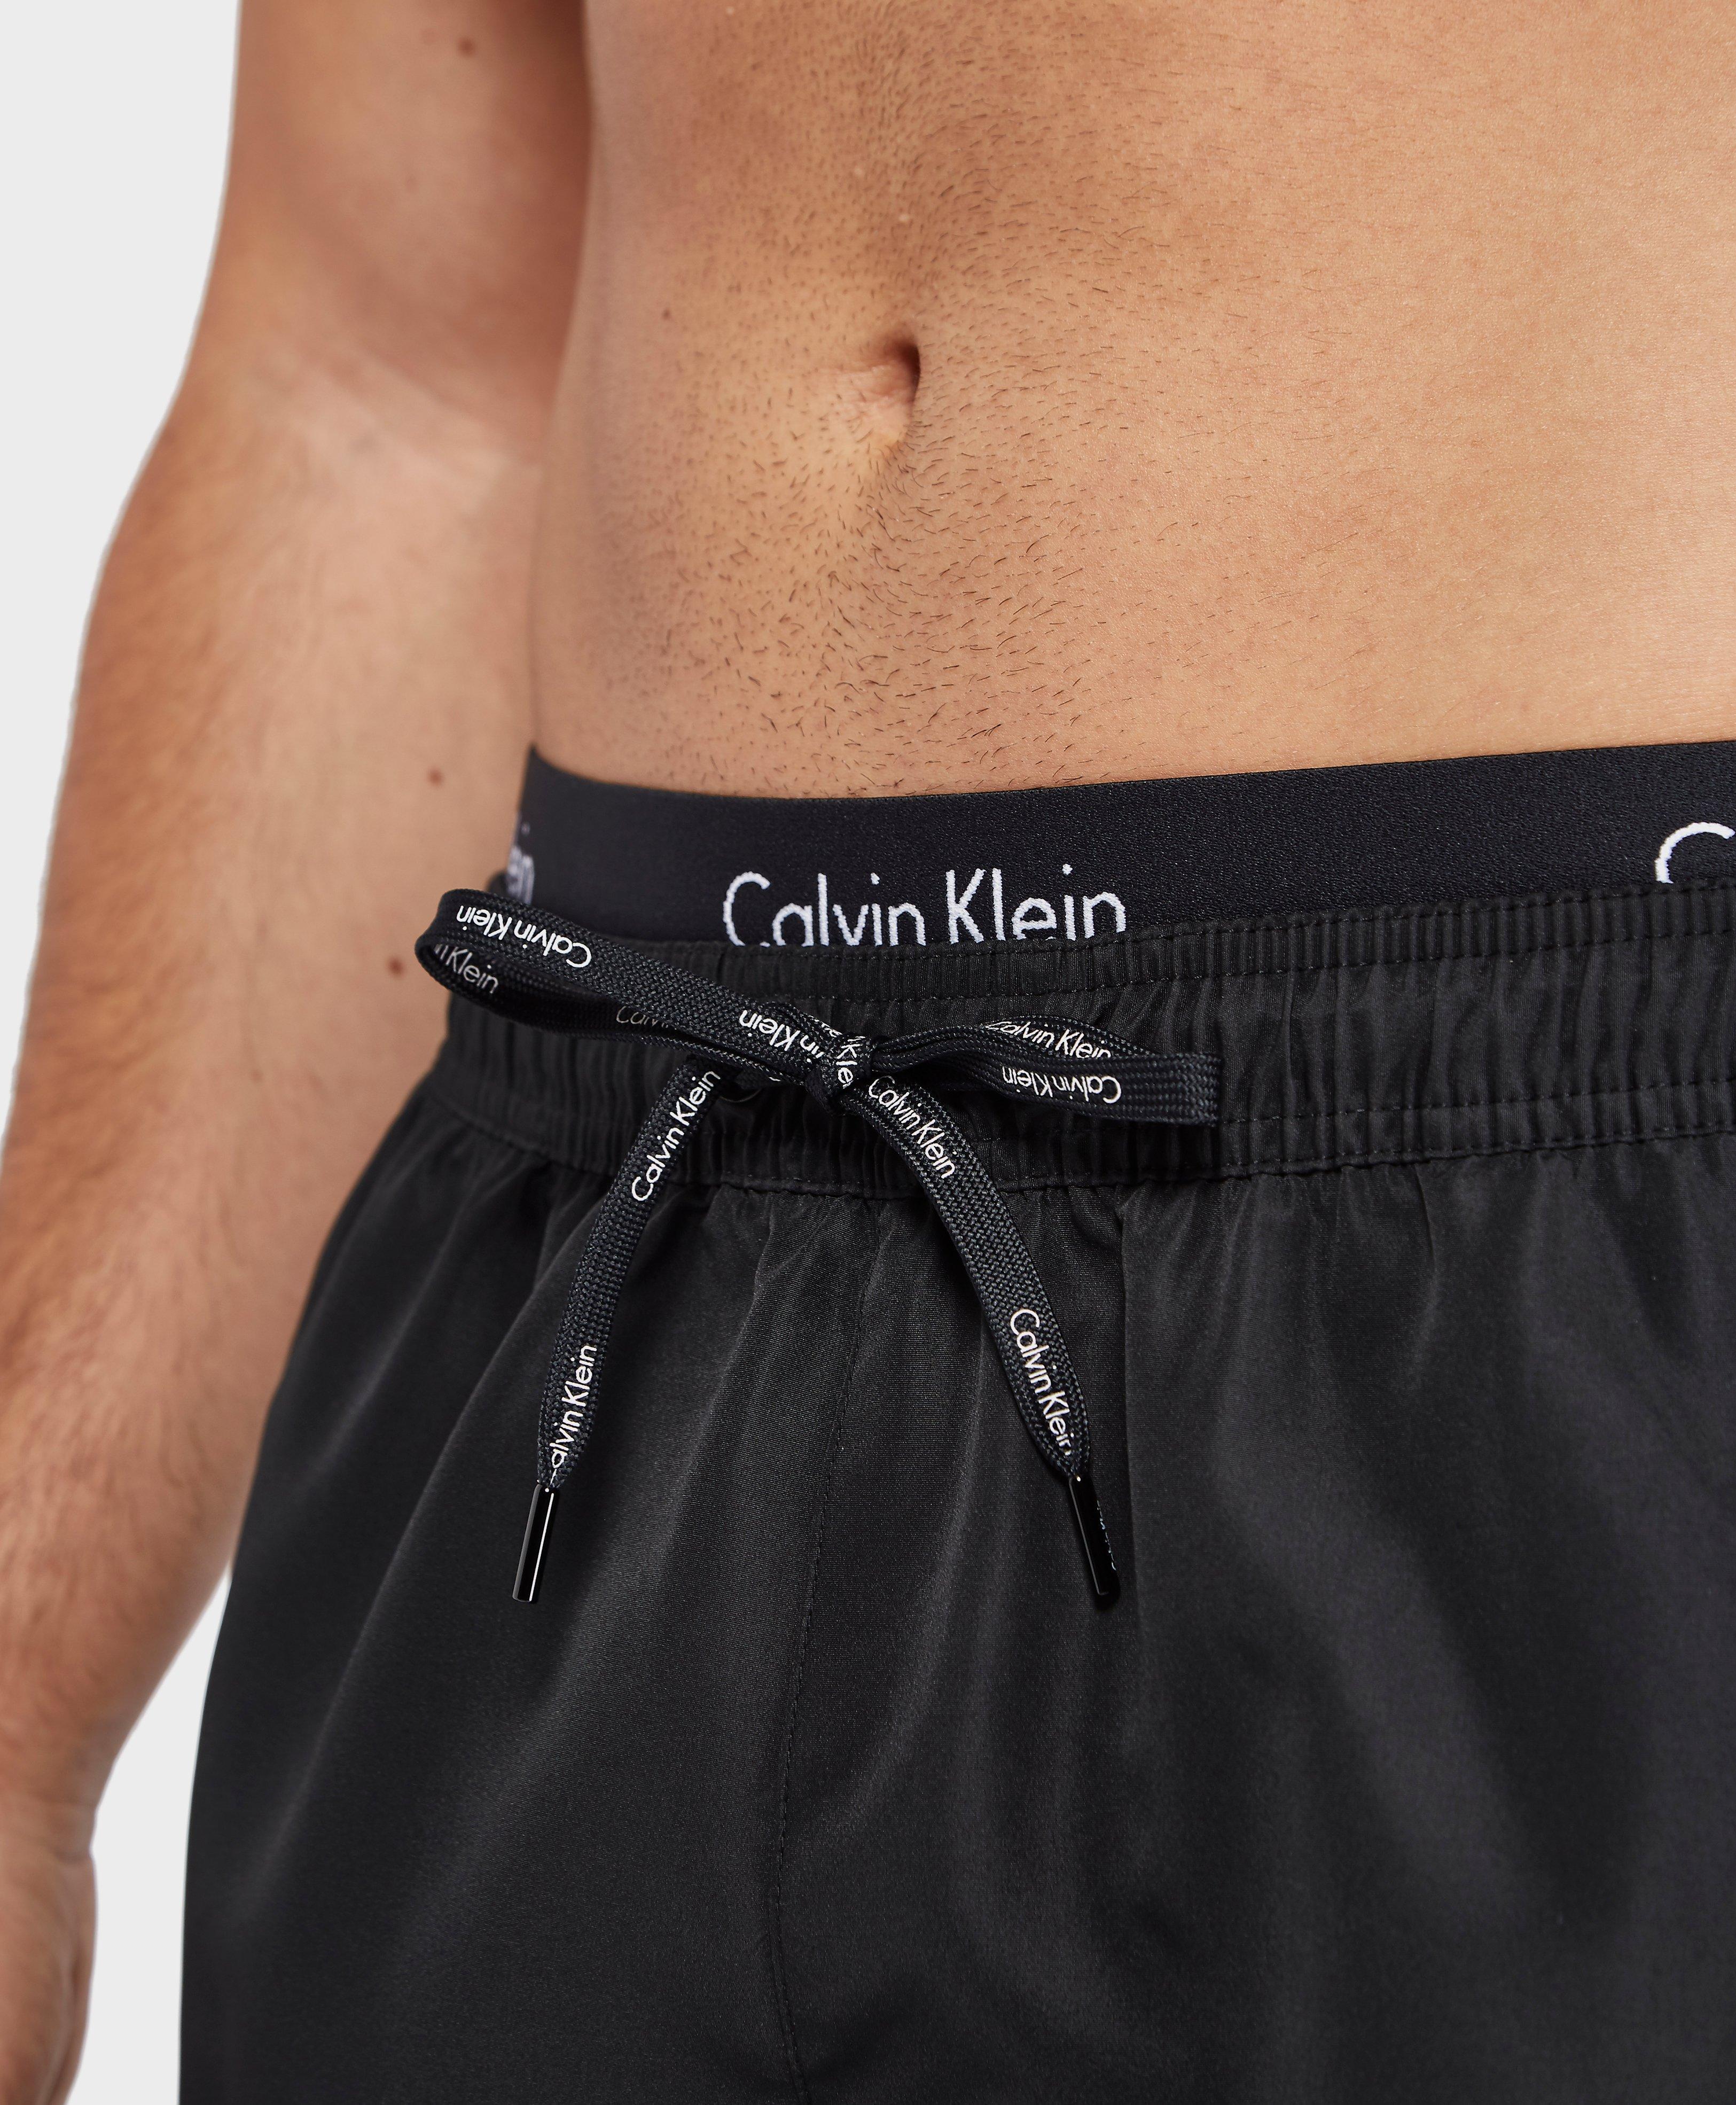 Calvin Klein Double Waistband Swim Shorts in Black for Men - Lyst